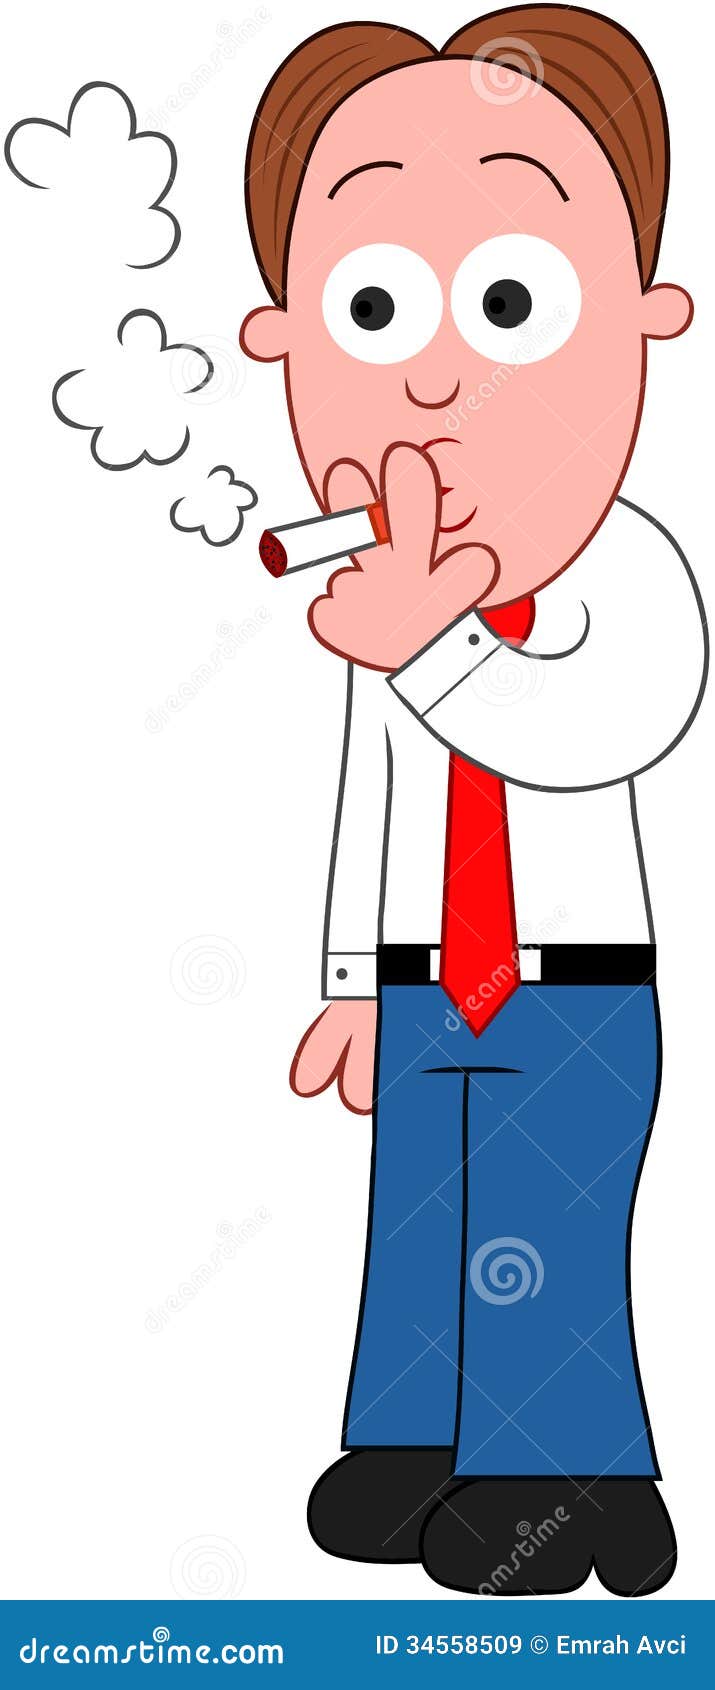 Cartoon Businessman Smoking. Royalty Free Stock Images - Image: 34558509